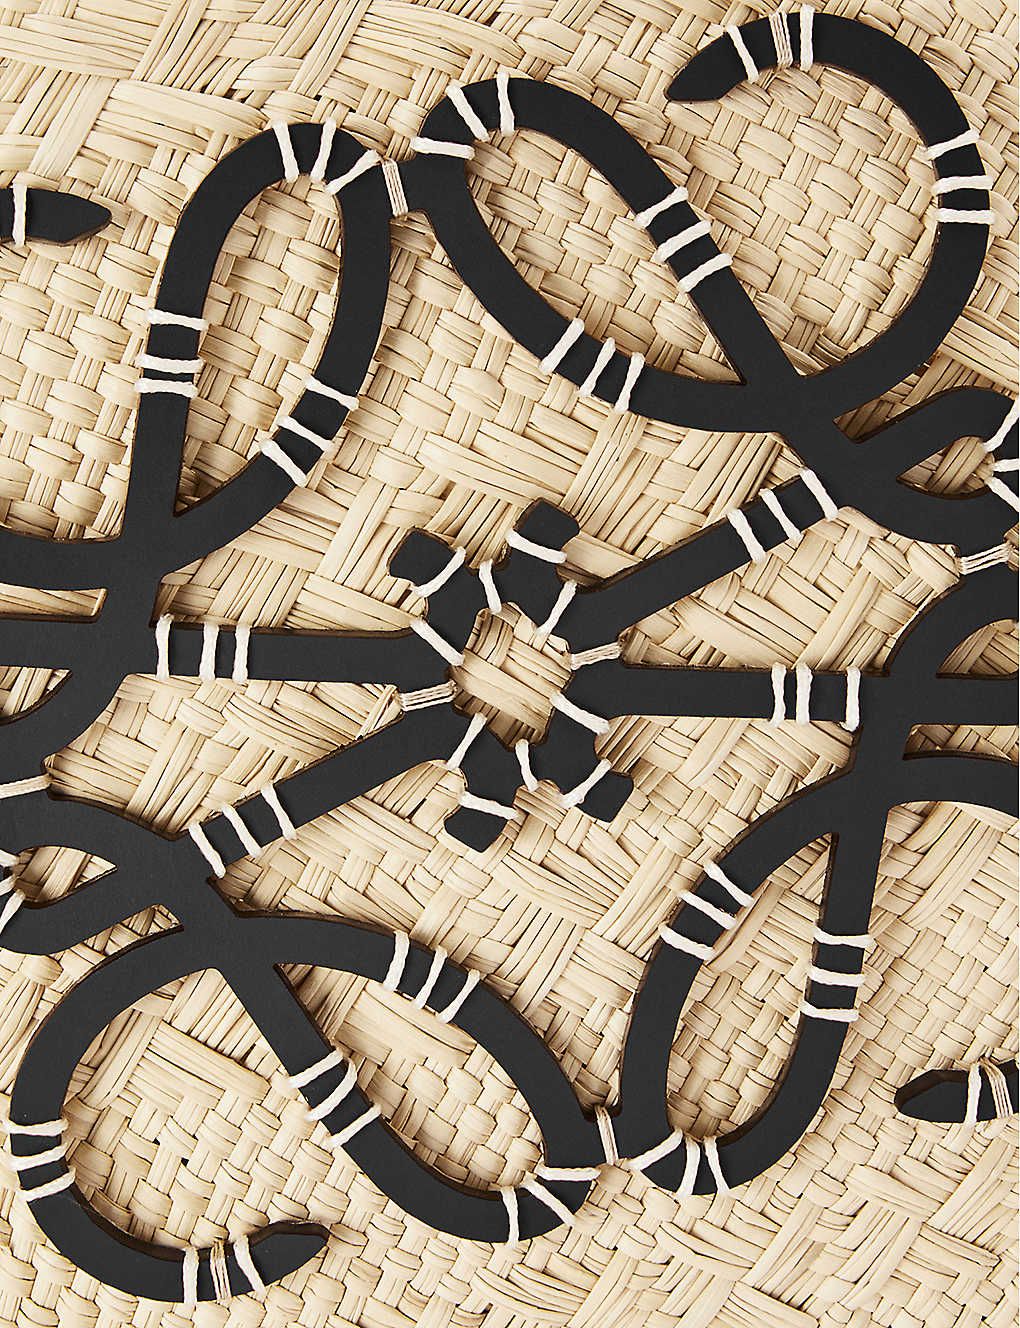 LOEWE Loewe Paula’s Ibiza Anagram palm-woven and leather tote bag | Selfridges